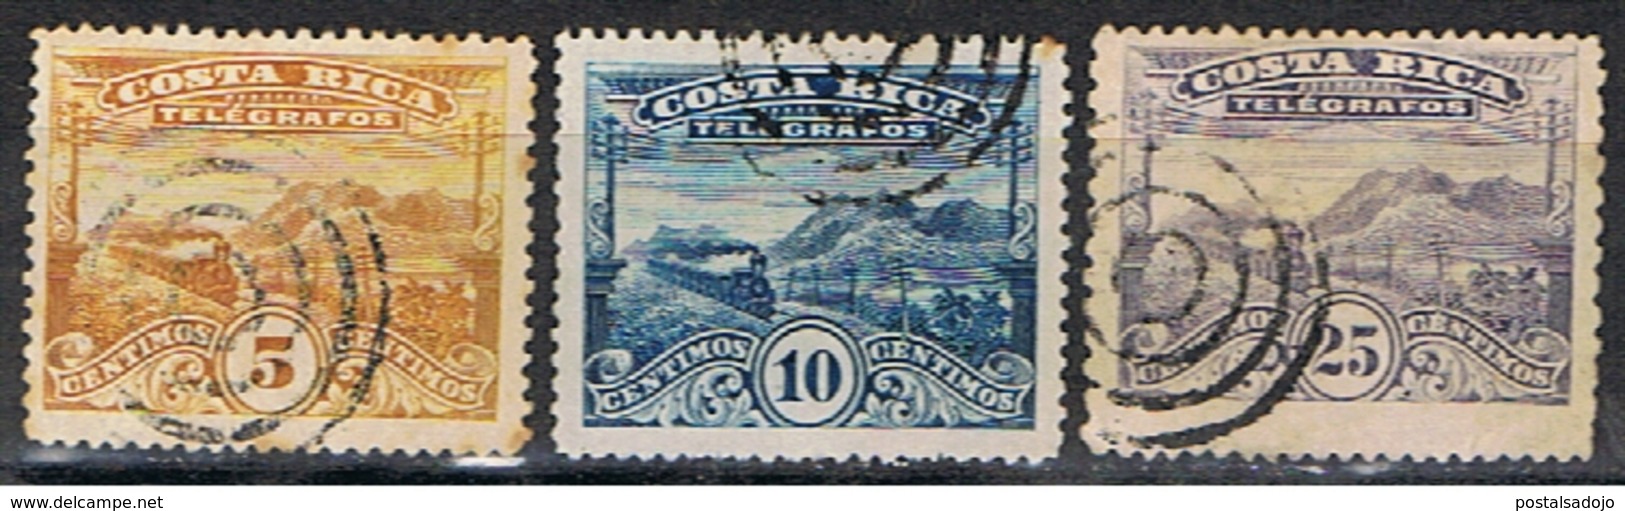 (COS 41) COSTA RICA //  YVERT 5, 6, 7 POSTE TÉLÉGRAPHE //  1907 - Costa Rica